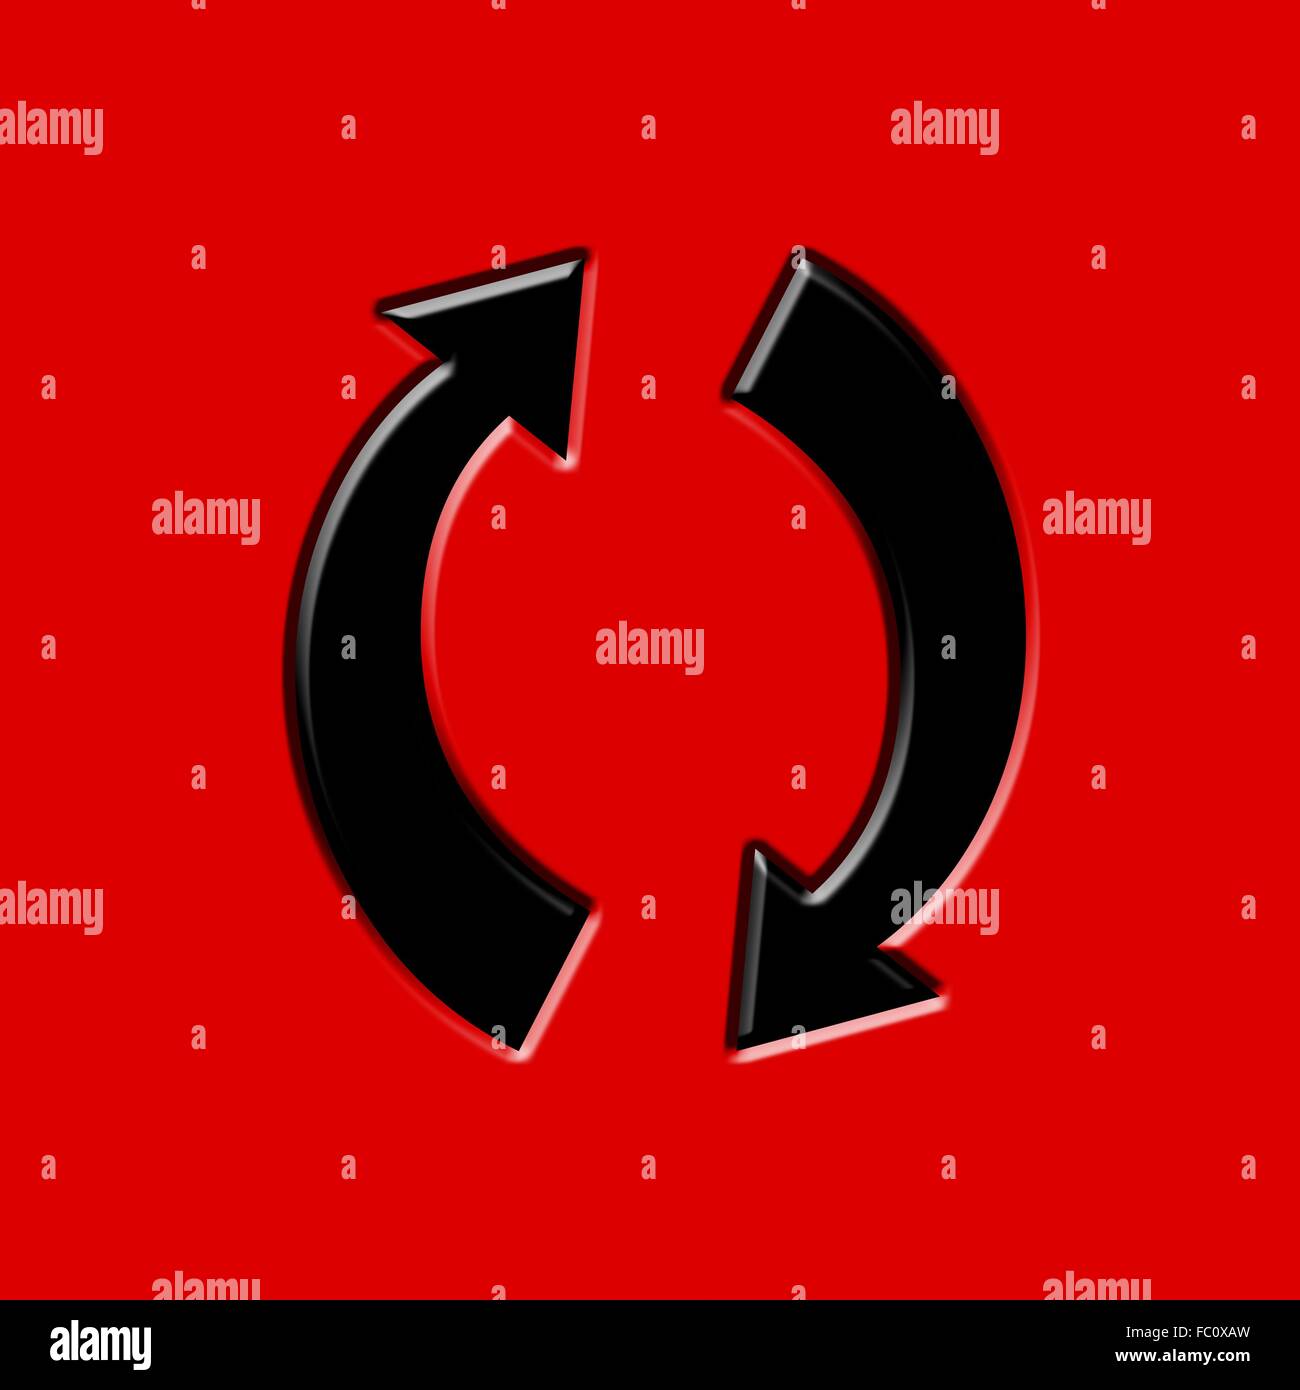 Flechas circulares de color negro sobre fondo rojo. Foto de stock